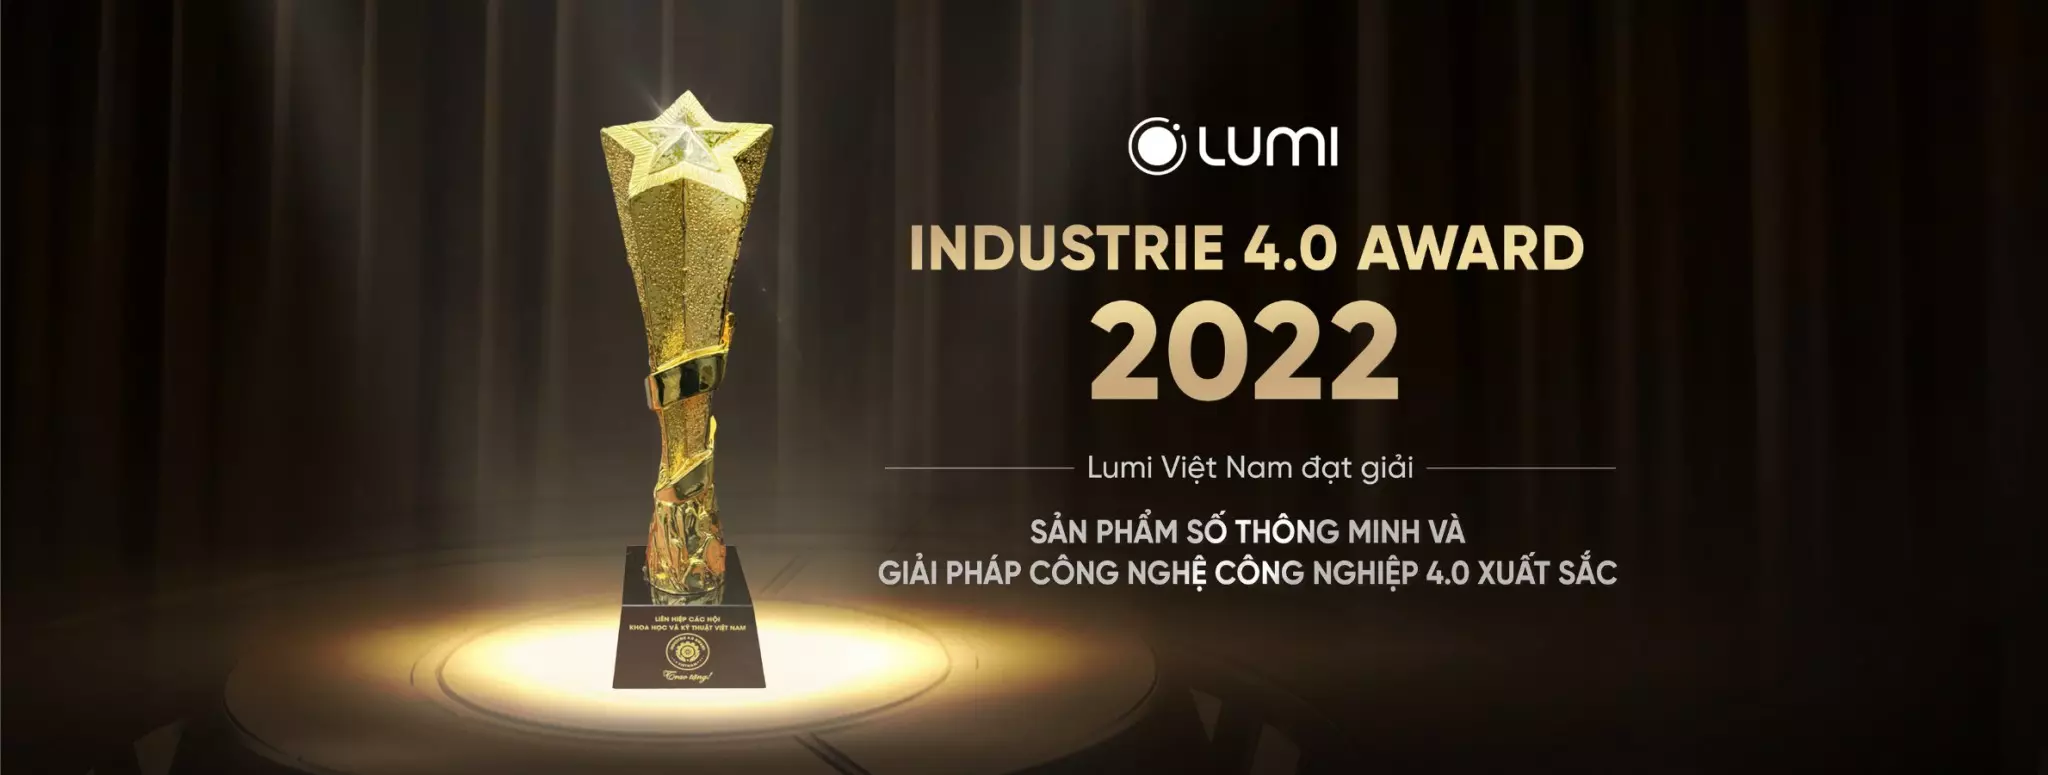 Lumi đạt giải industrie 4.0 award